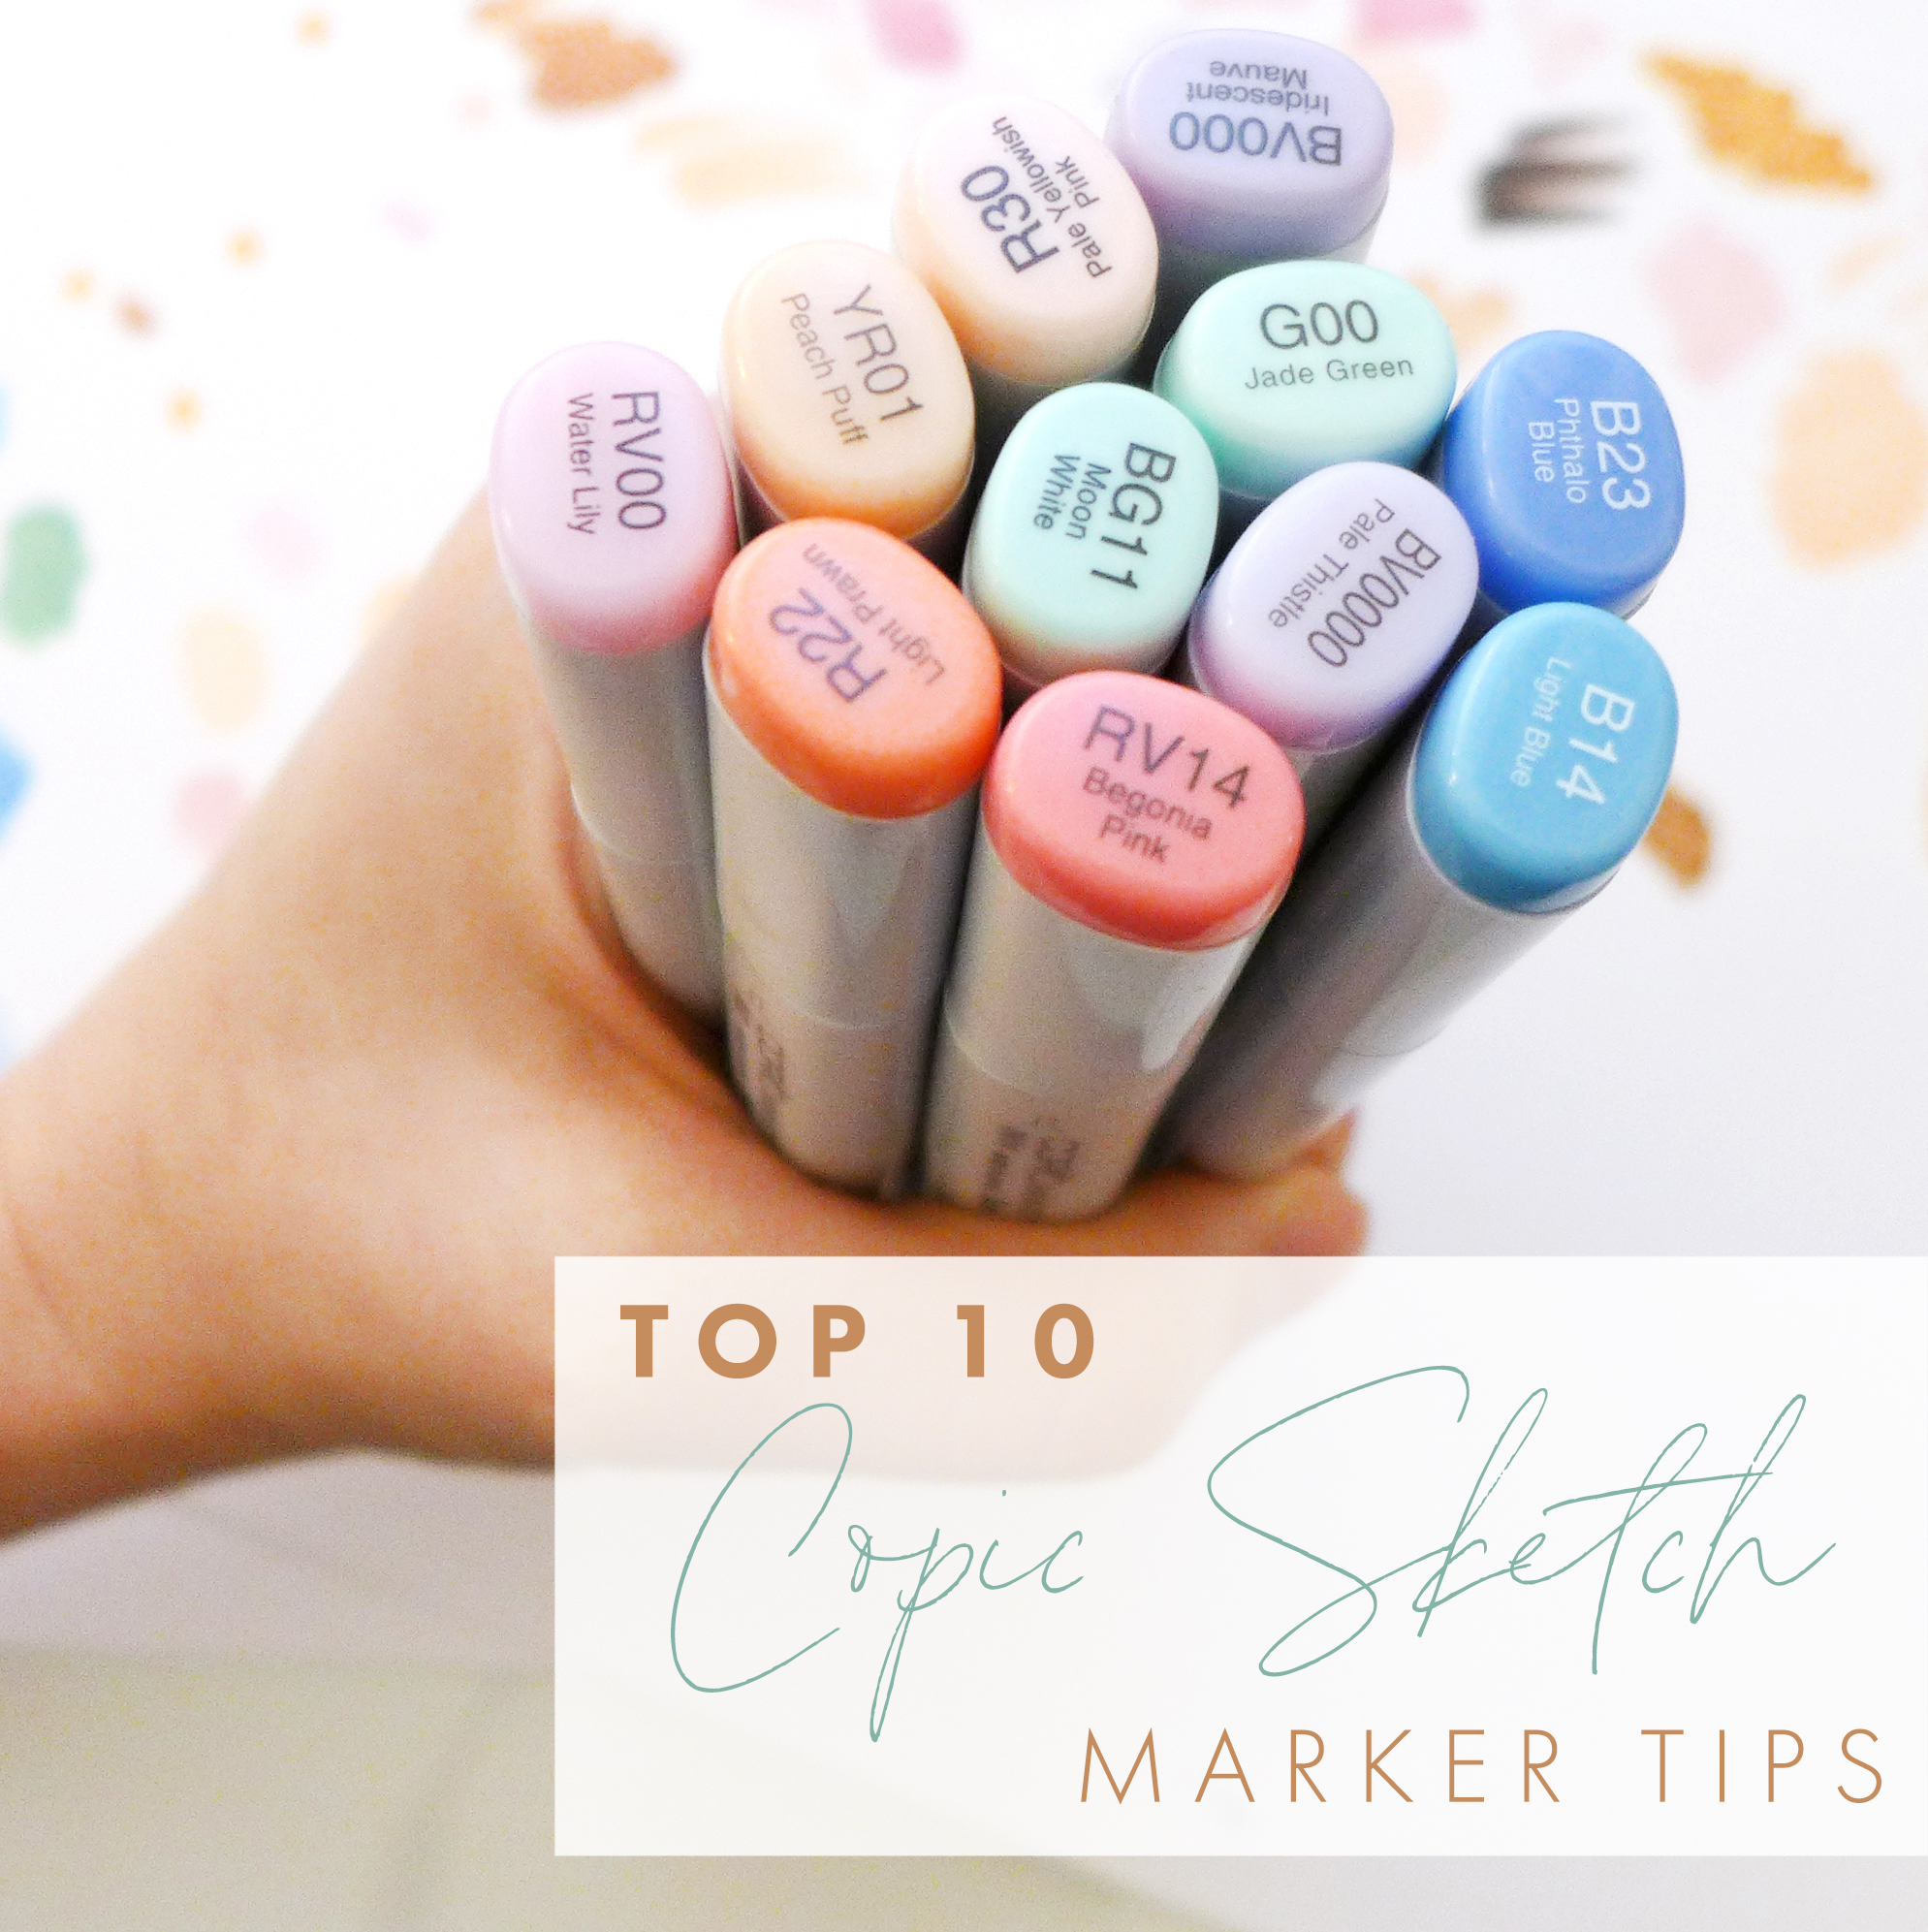 Top 10 Copic Sketch Marker Tips by Joanna Baker Illustration